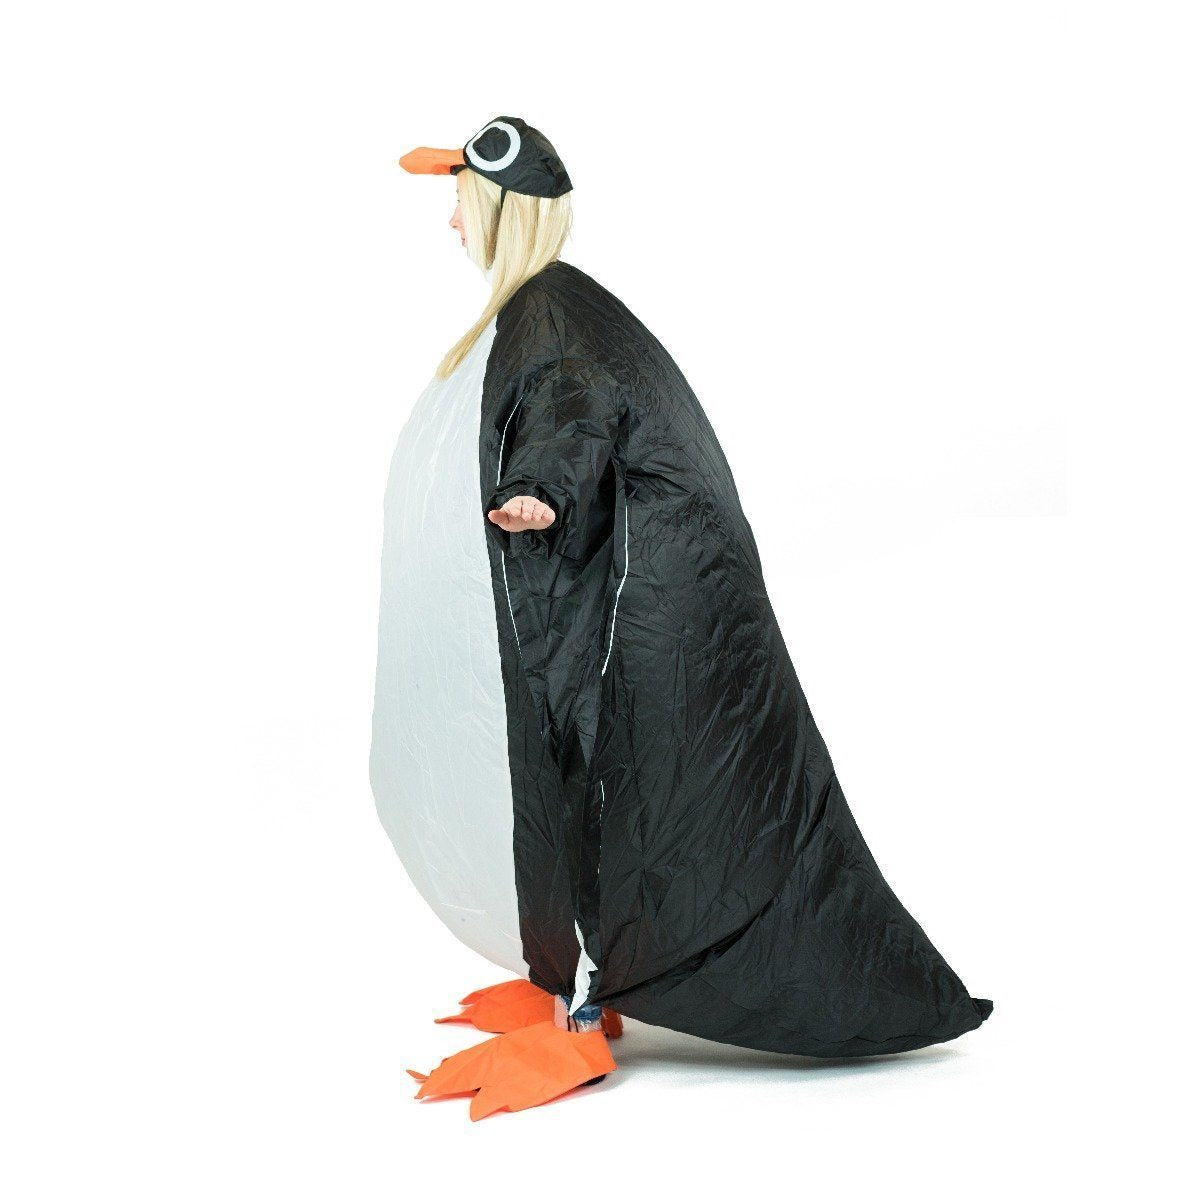 Fancy Dress - Inflatable Penguin Costume